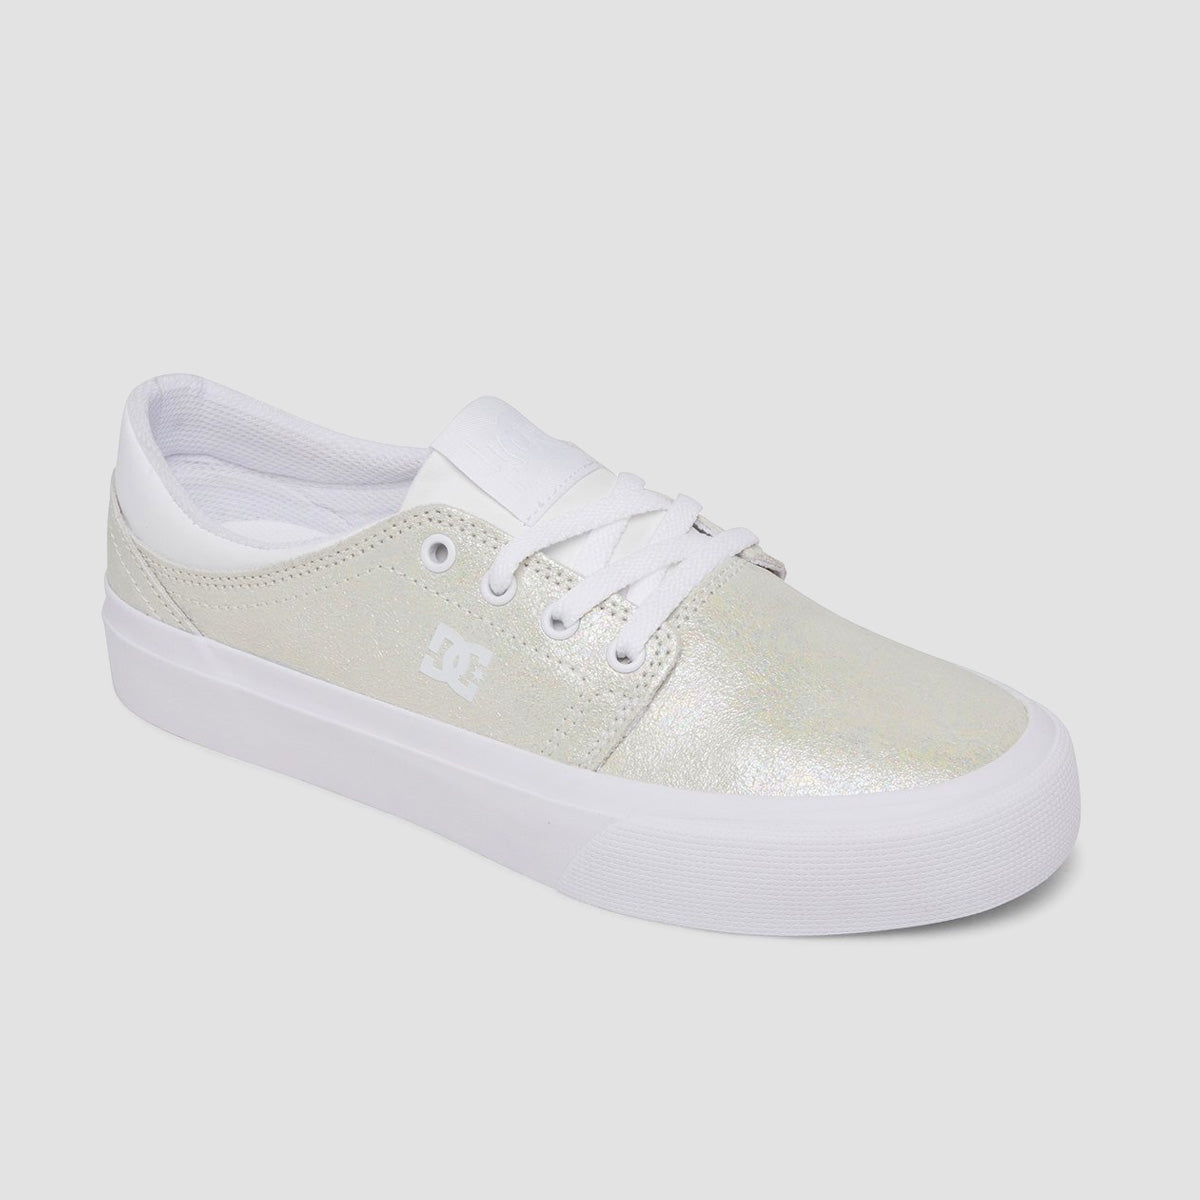 DC Trase Shoes - White/White - Womens